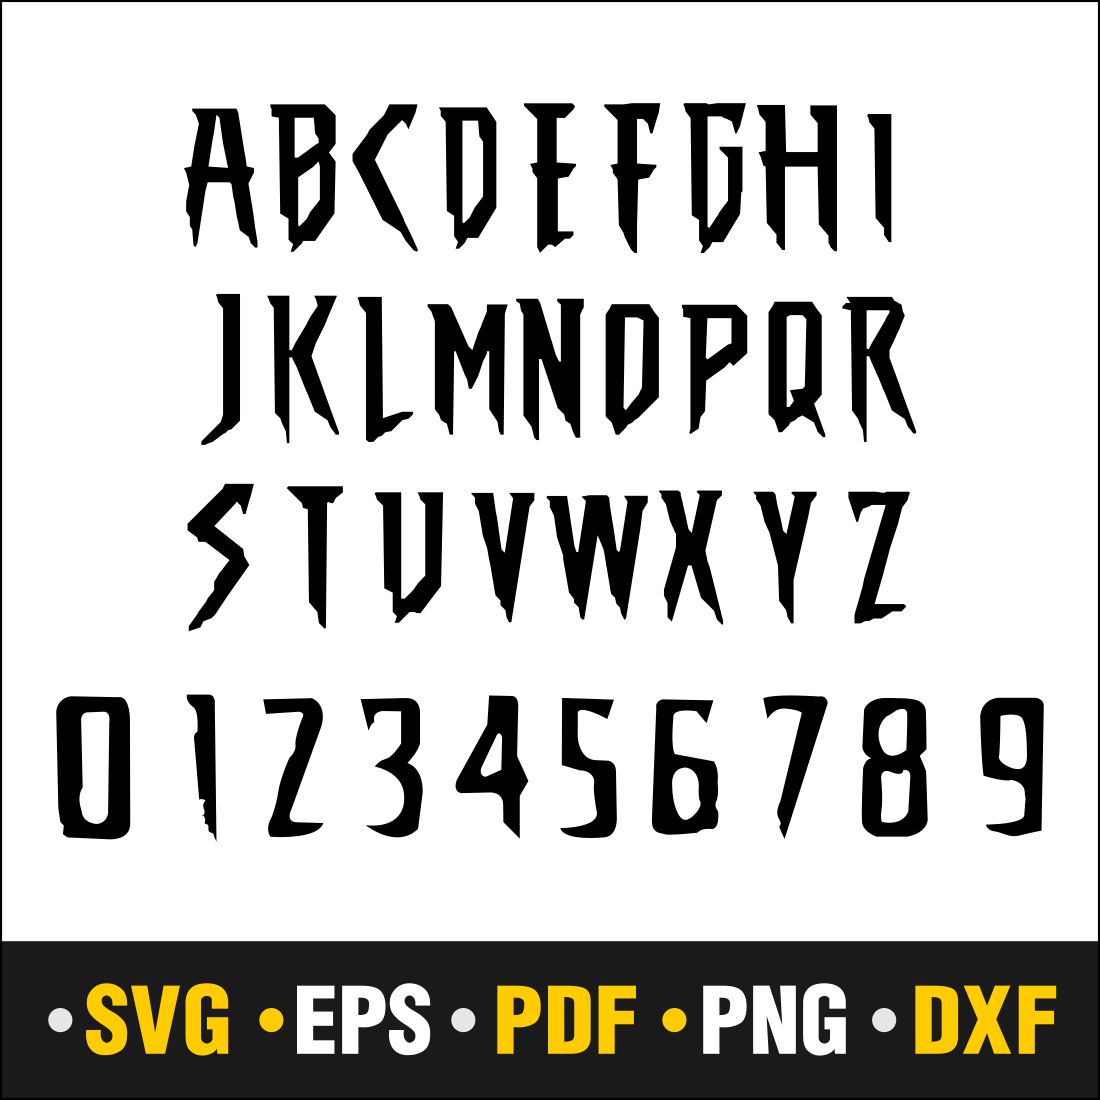 Spiderman Font Svg, Spiderman Svg Vector Cut file Cricut, Silhouette, Pdf Png, Dxf, Decal, Sticker, Stencil, Vinyl cover image.